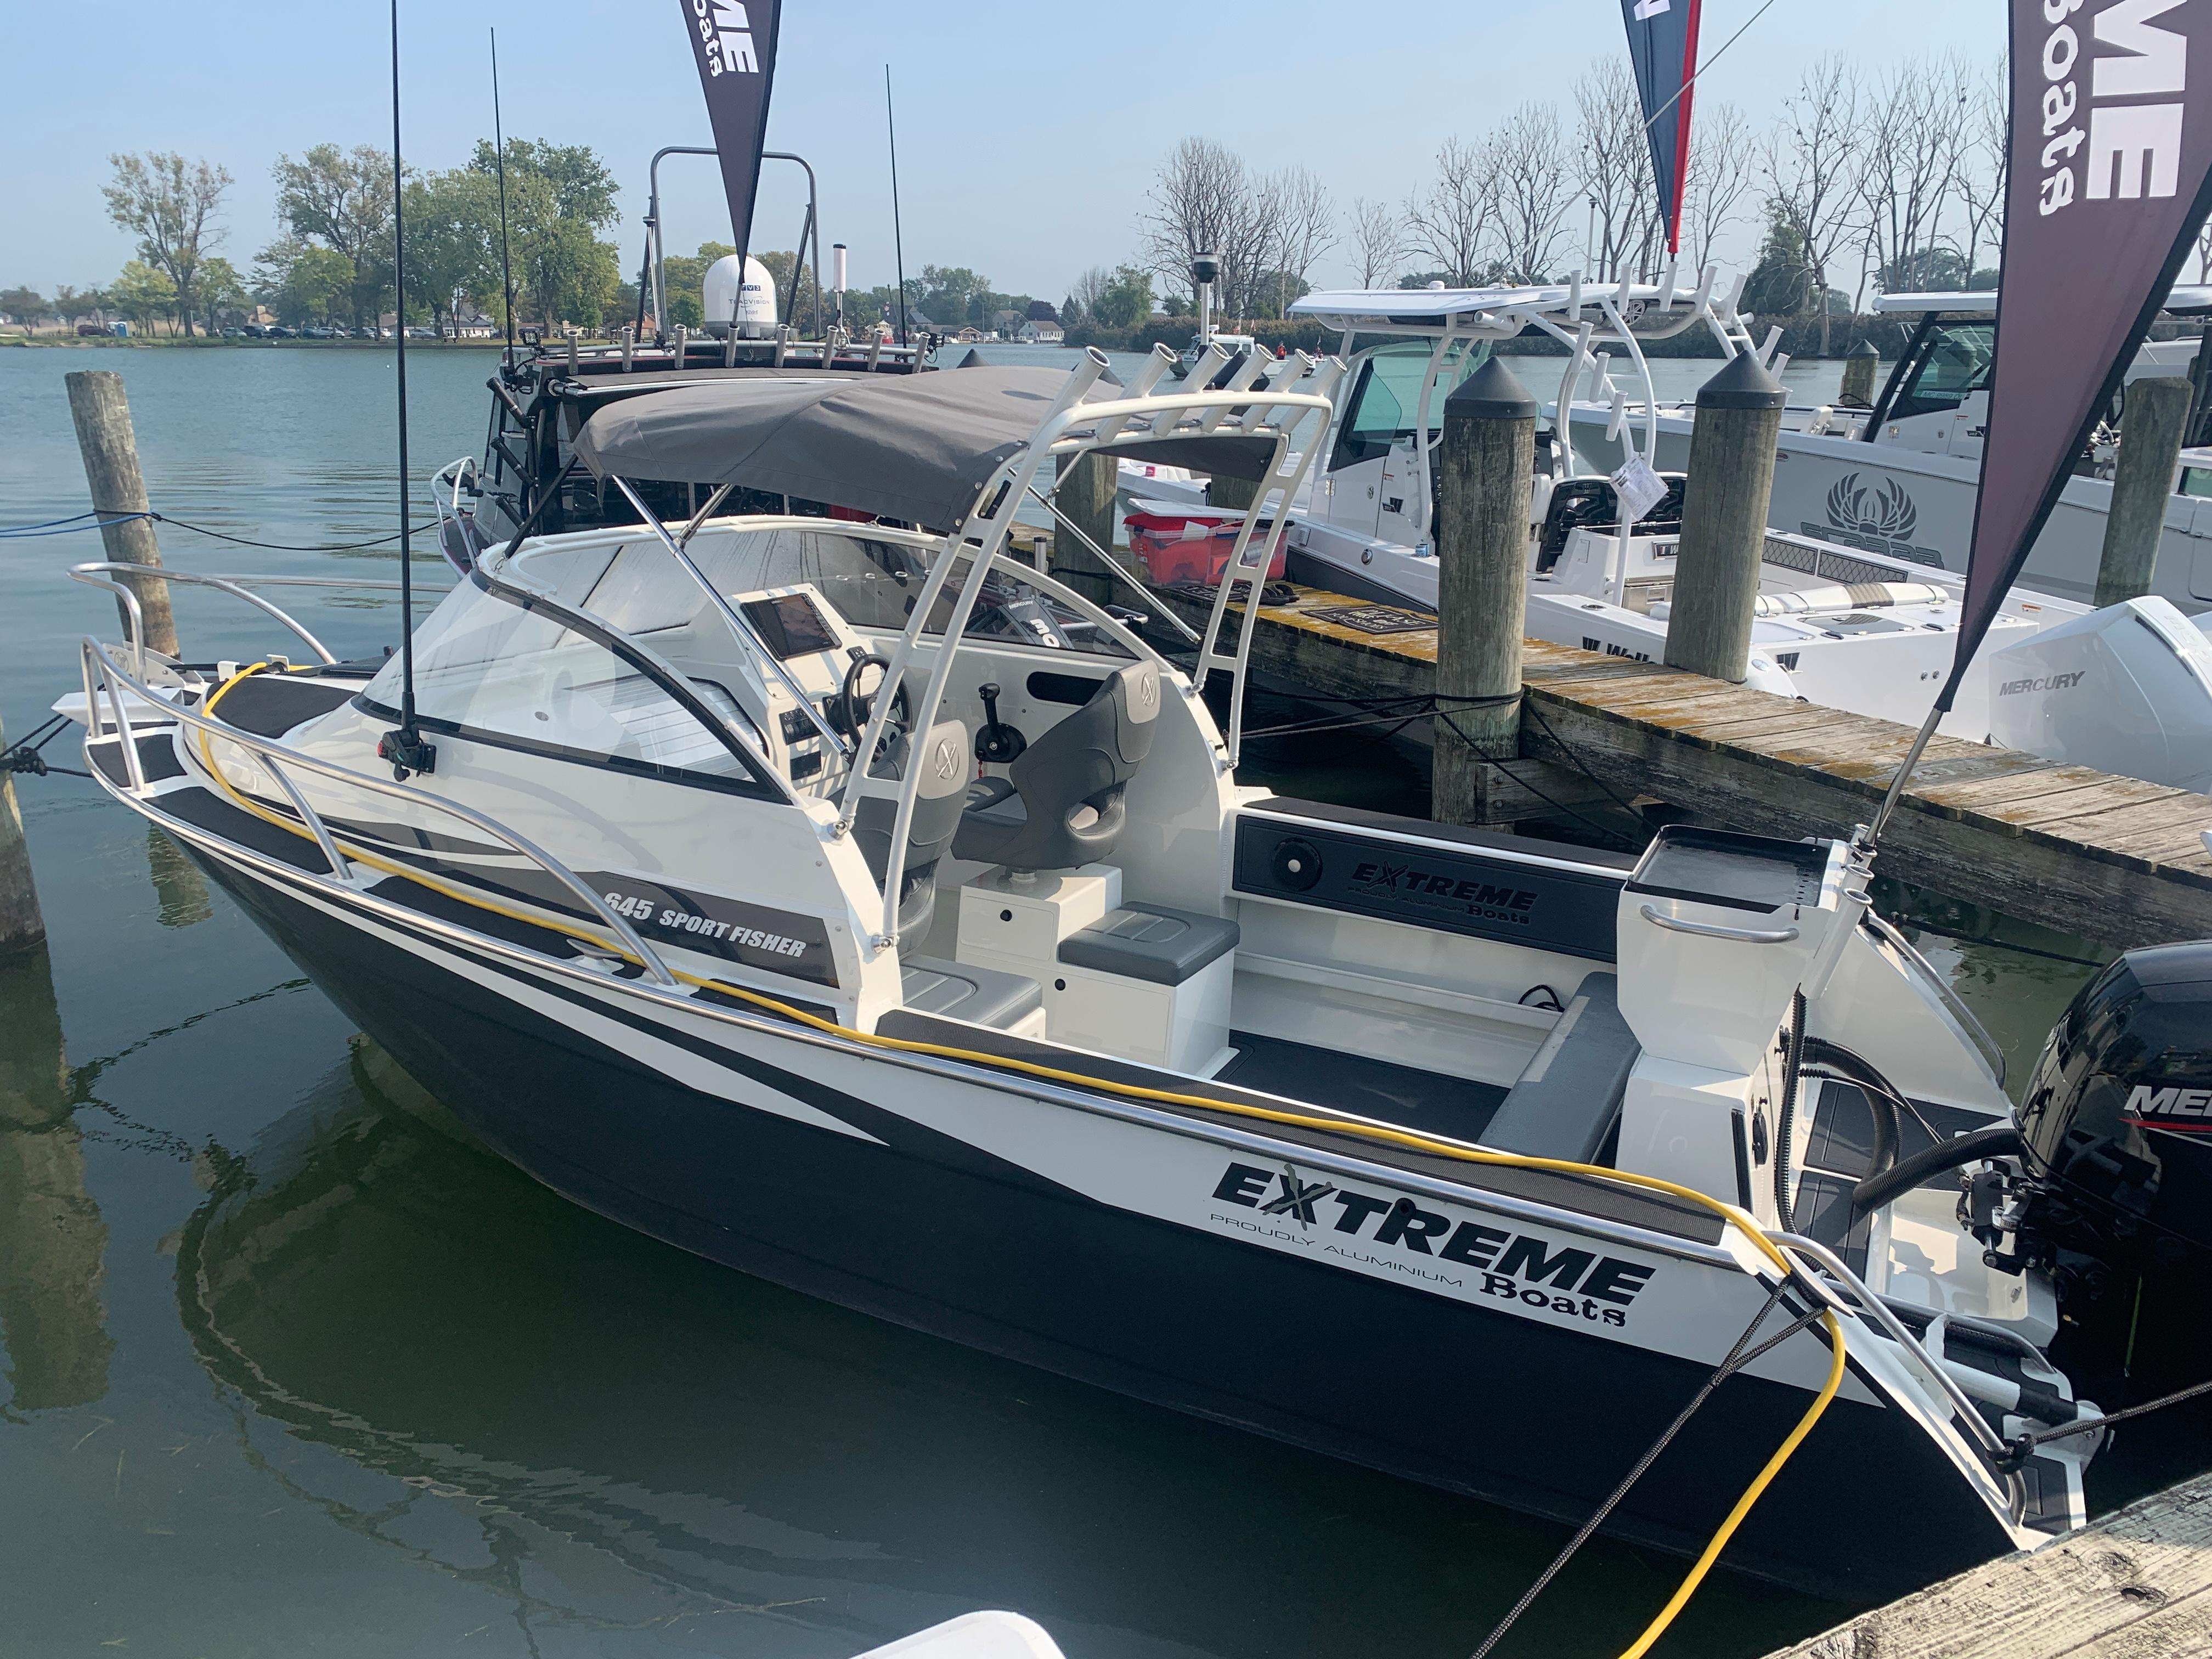 omringen Vast en zeker Laboratorium 2022 Extreme Boats 645 Sport Fisher Parma, Ohio - Parma Marine | Authorized  Dealer of Extreme & Alumacraft Boats | Evinrude Outboards & Mercruiser Parts